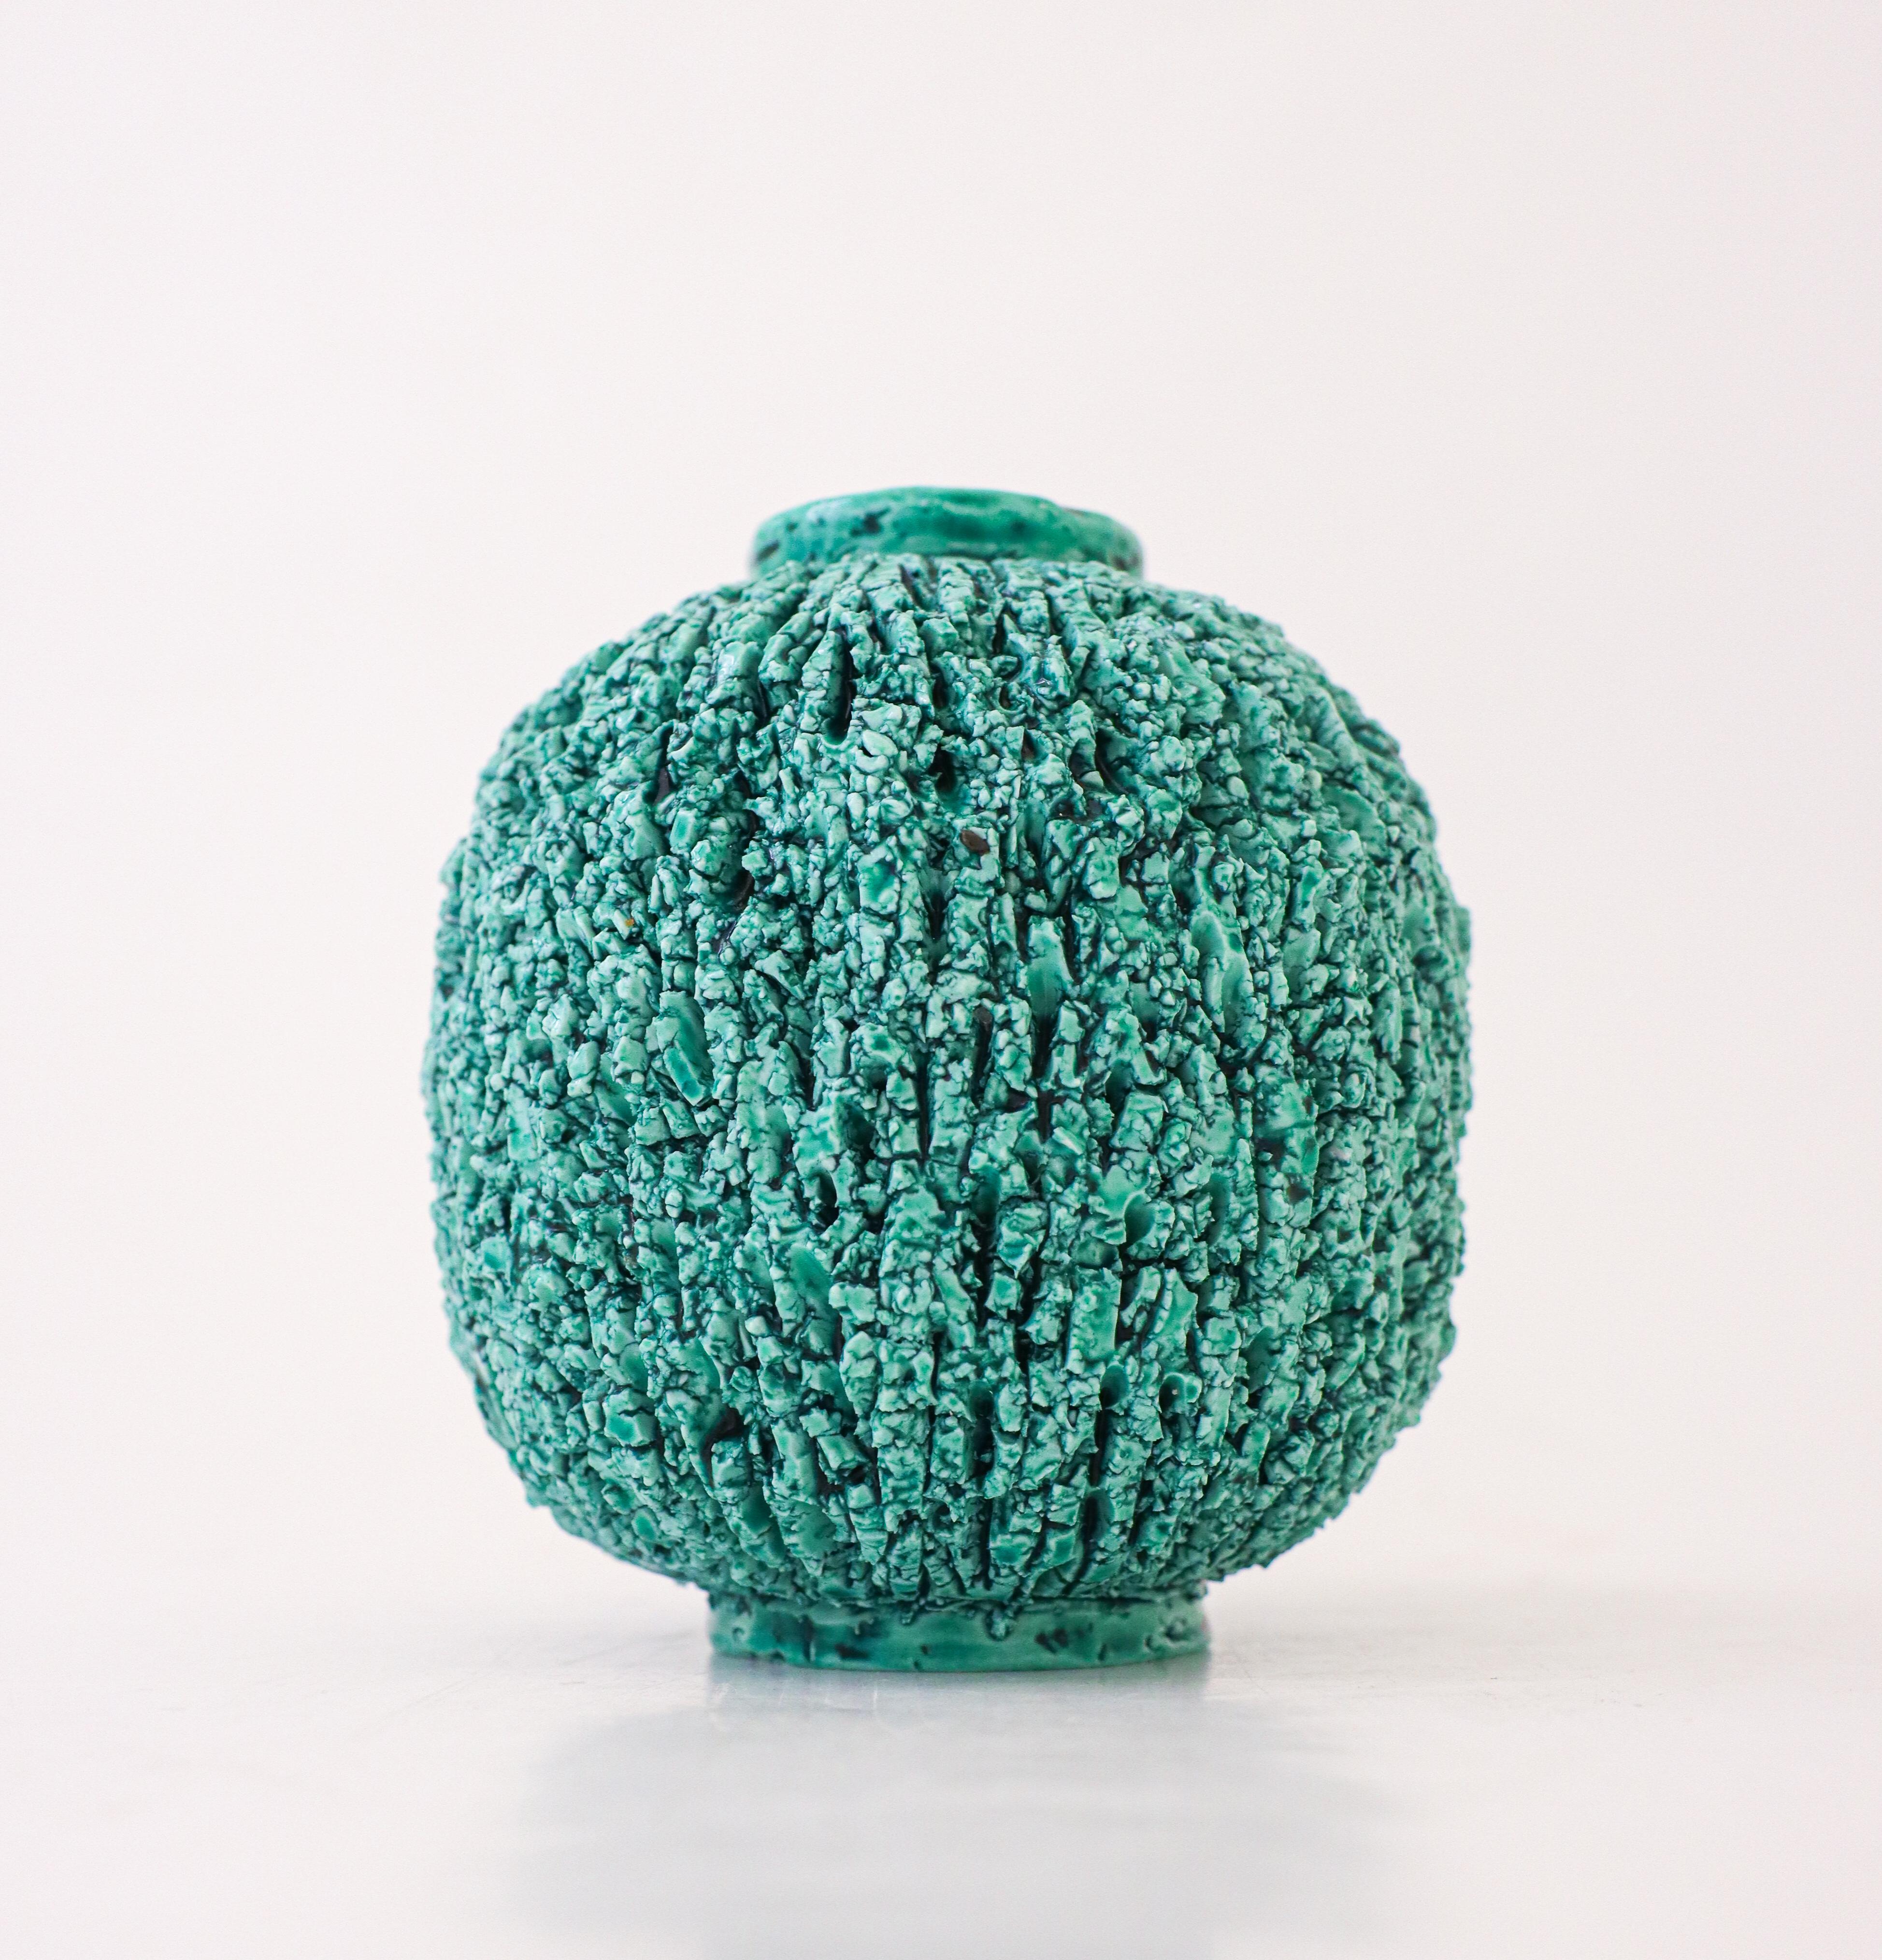 A green Hedgehog-vase designed by Gunnar Nylund at Rörstrand. It is 11 cm (4.4